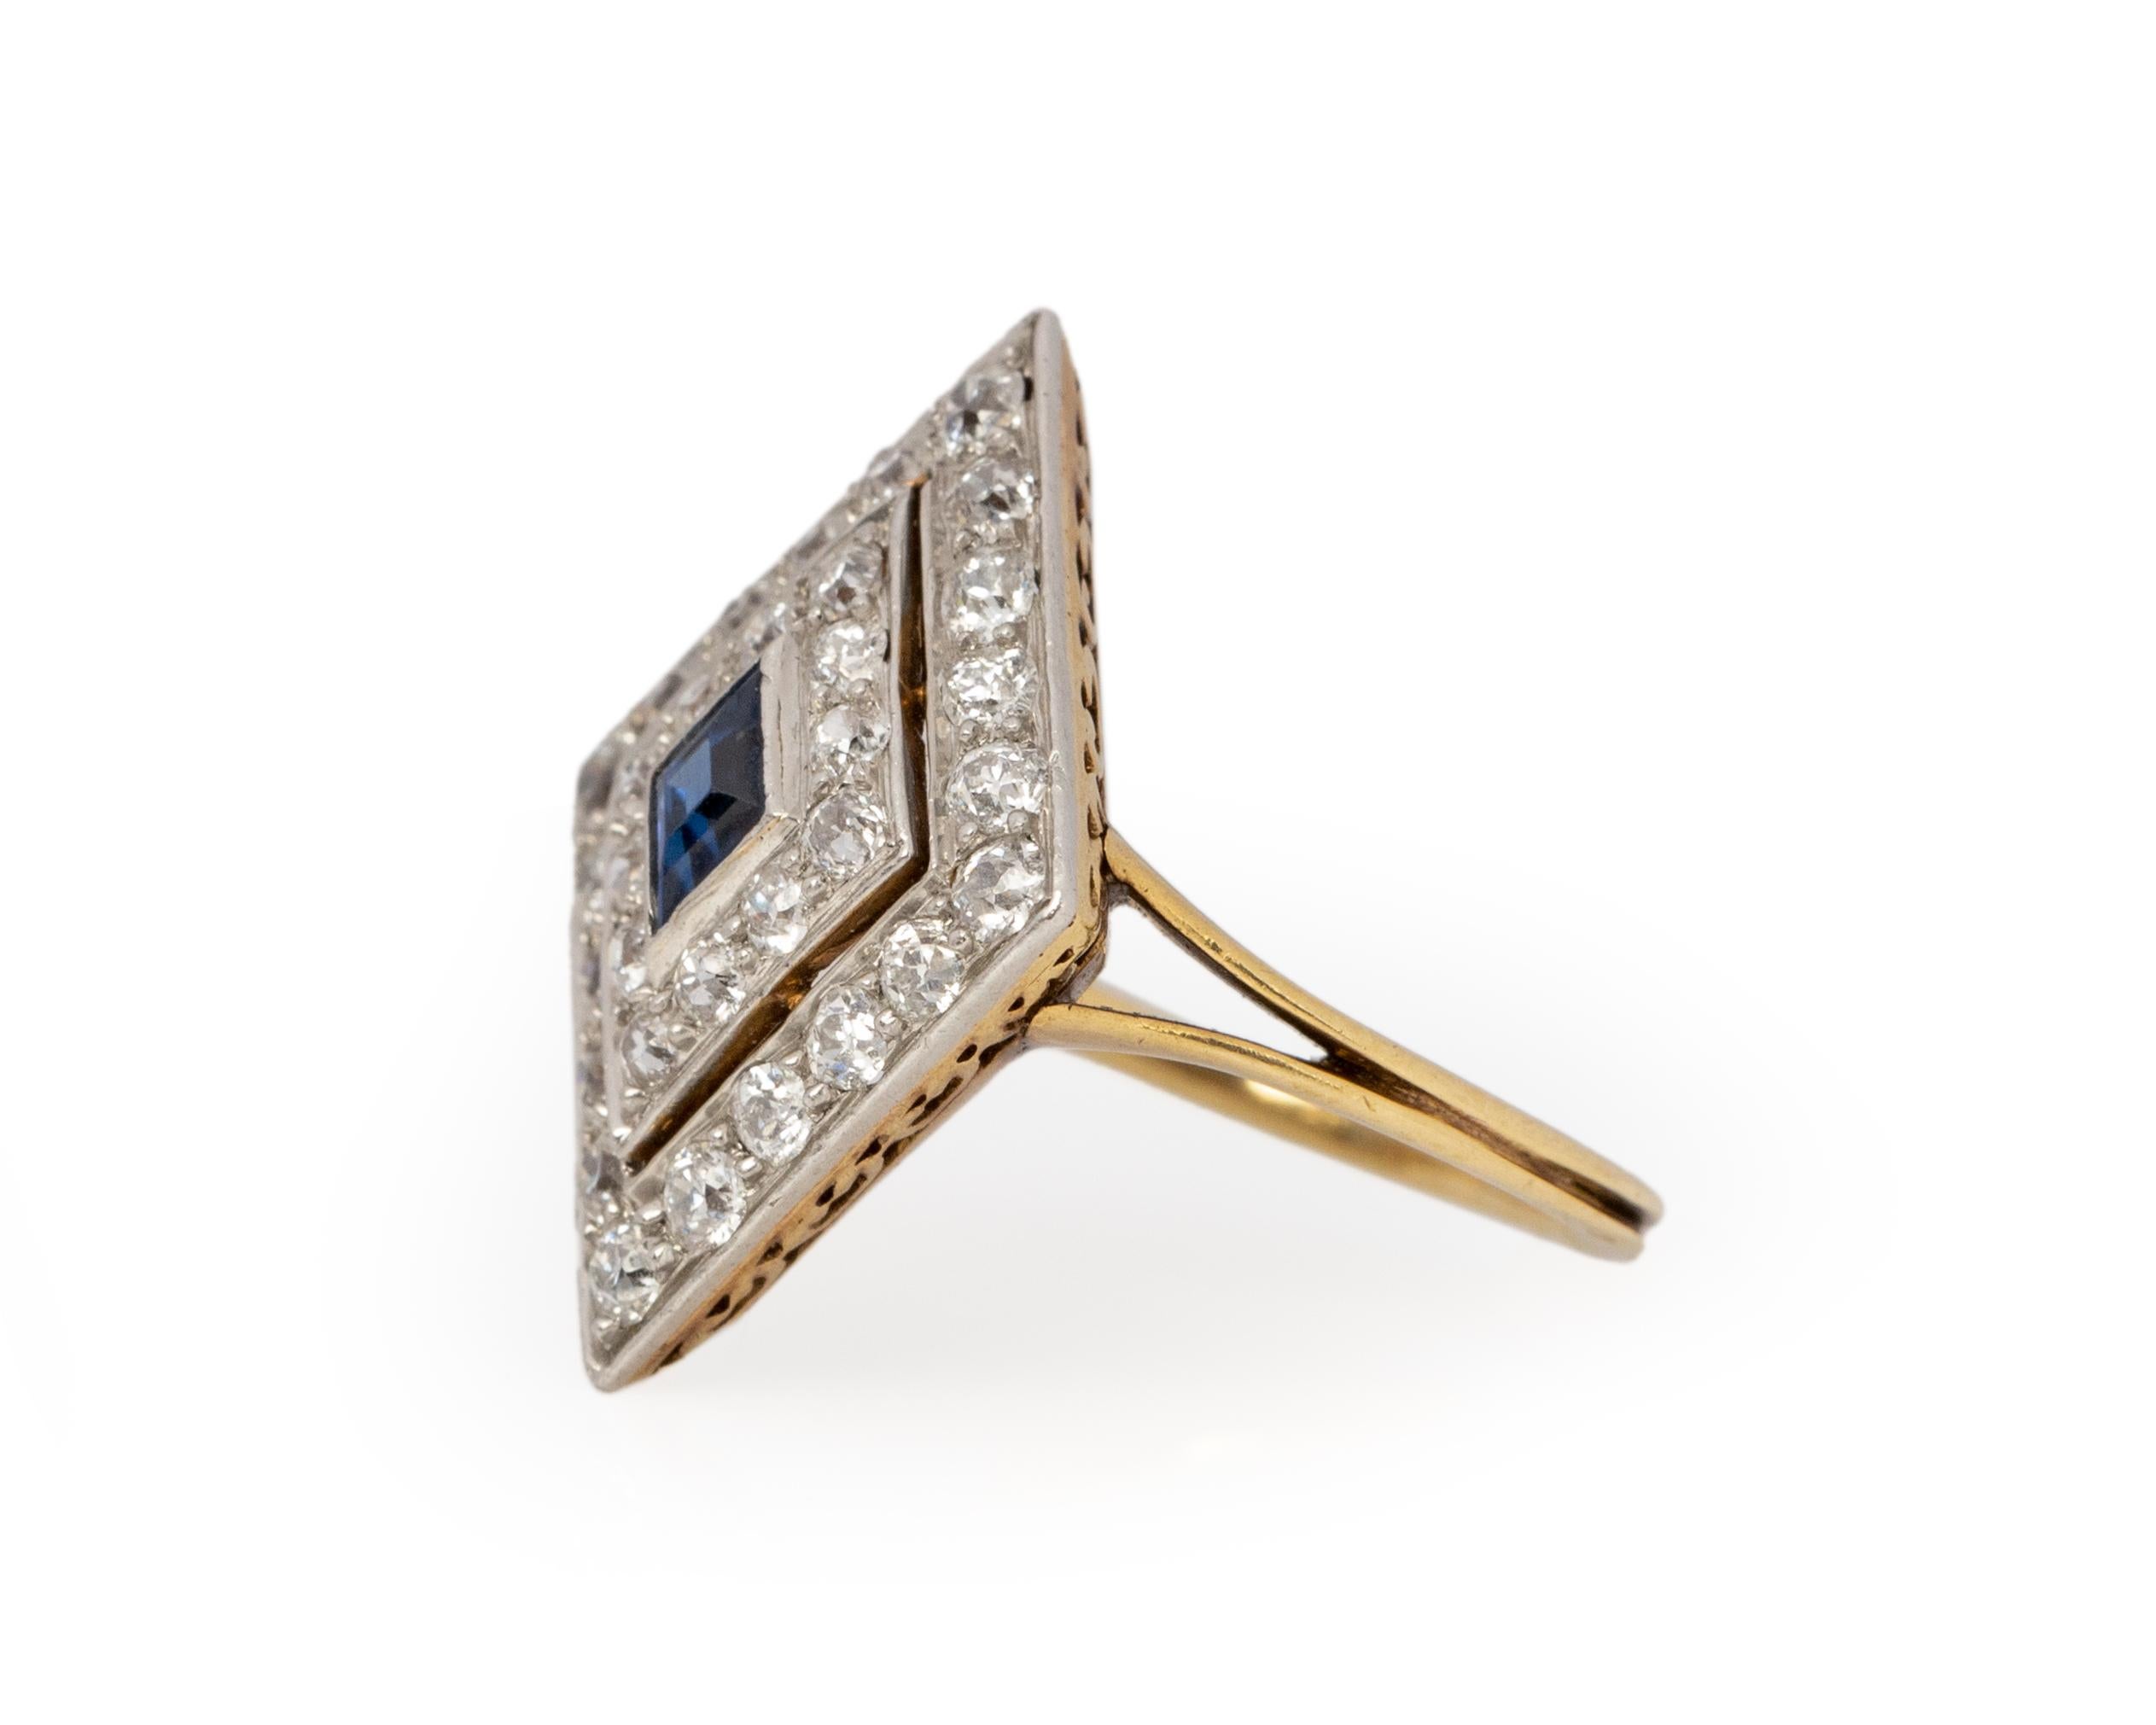 80 carat diamond ring